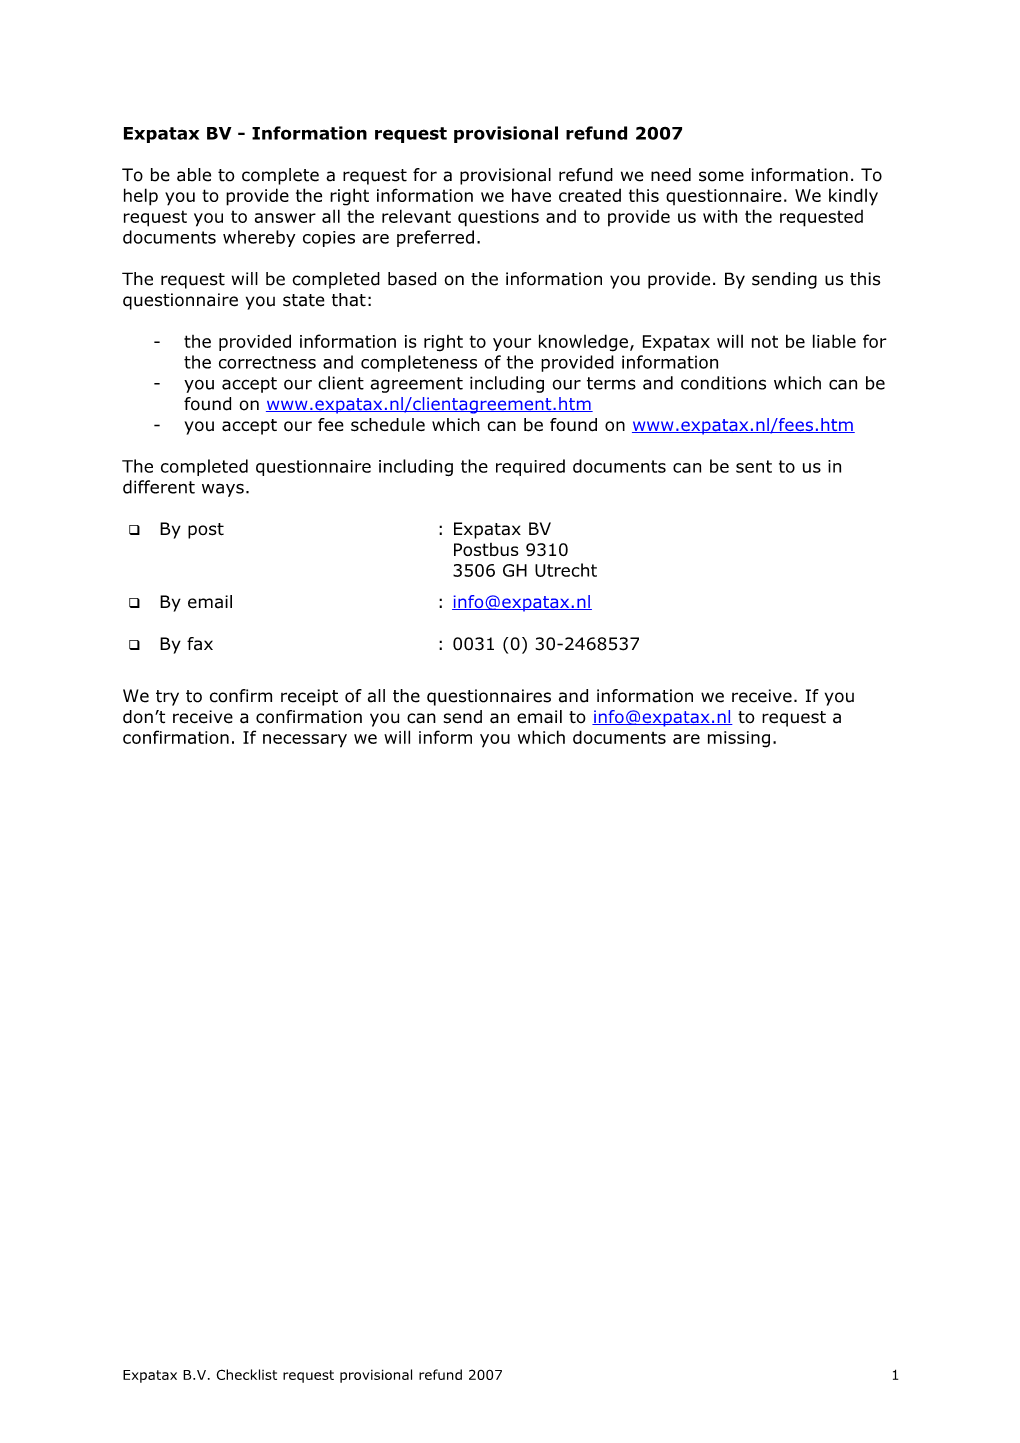 Expatax BV - Information Request Provisional Refund 2007